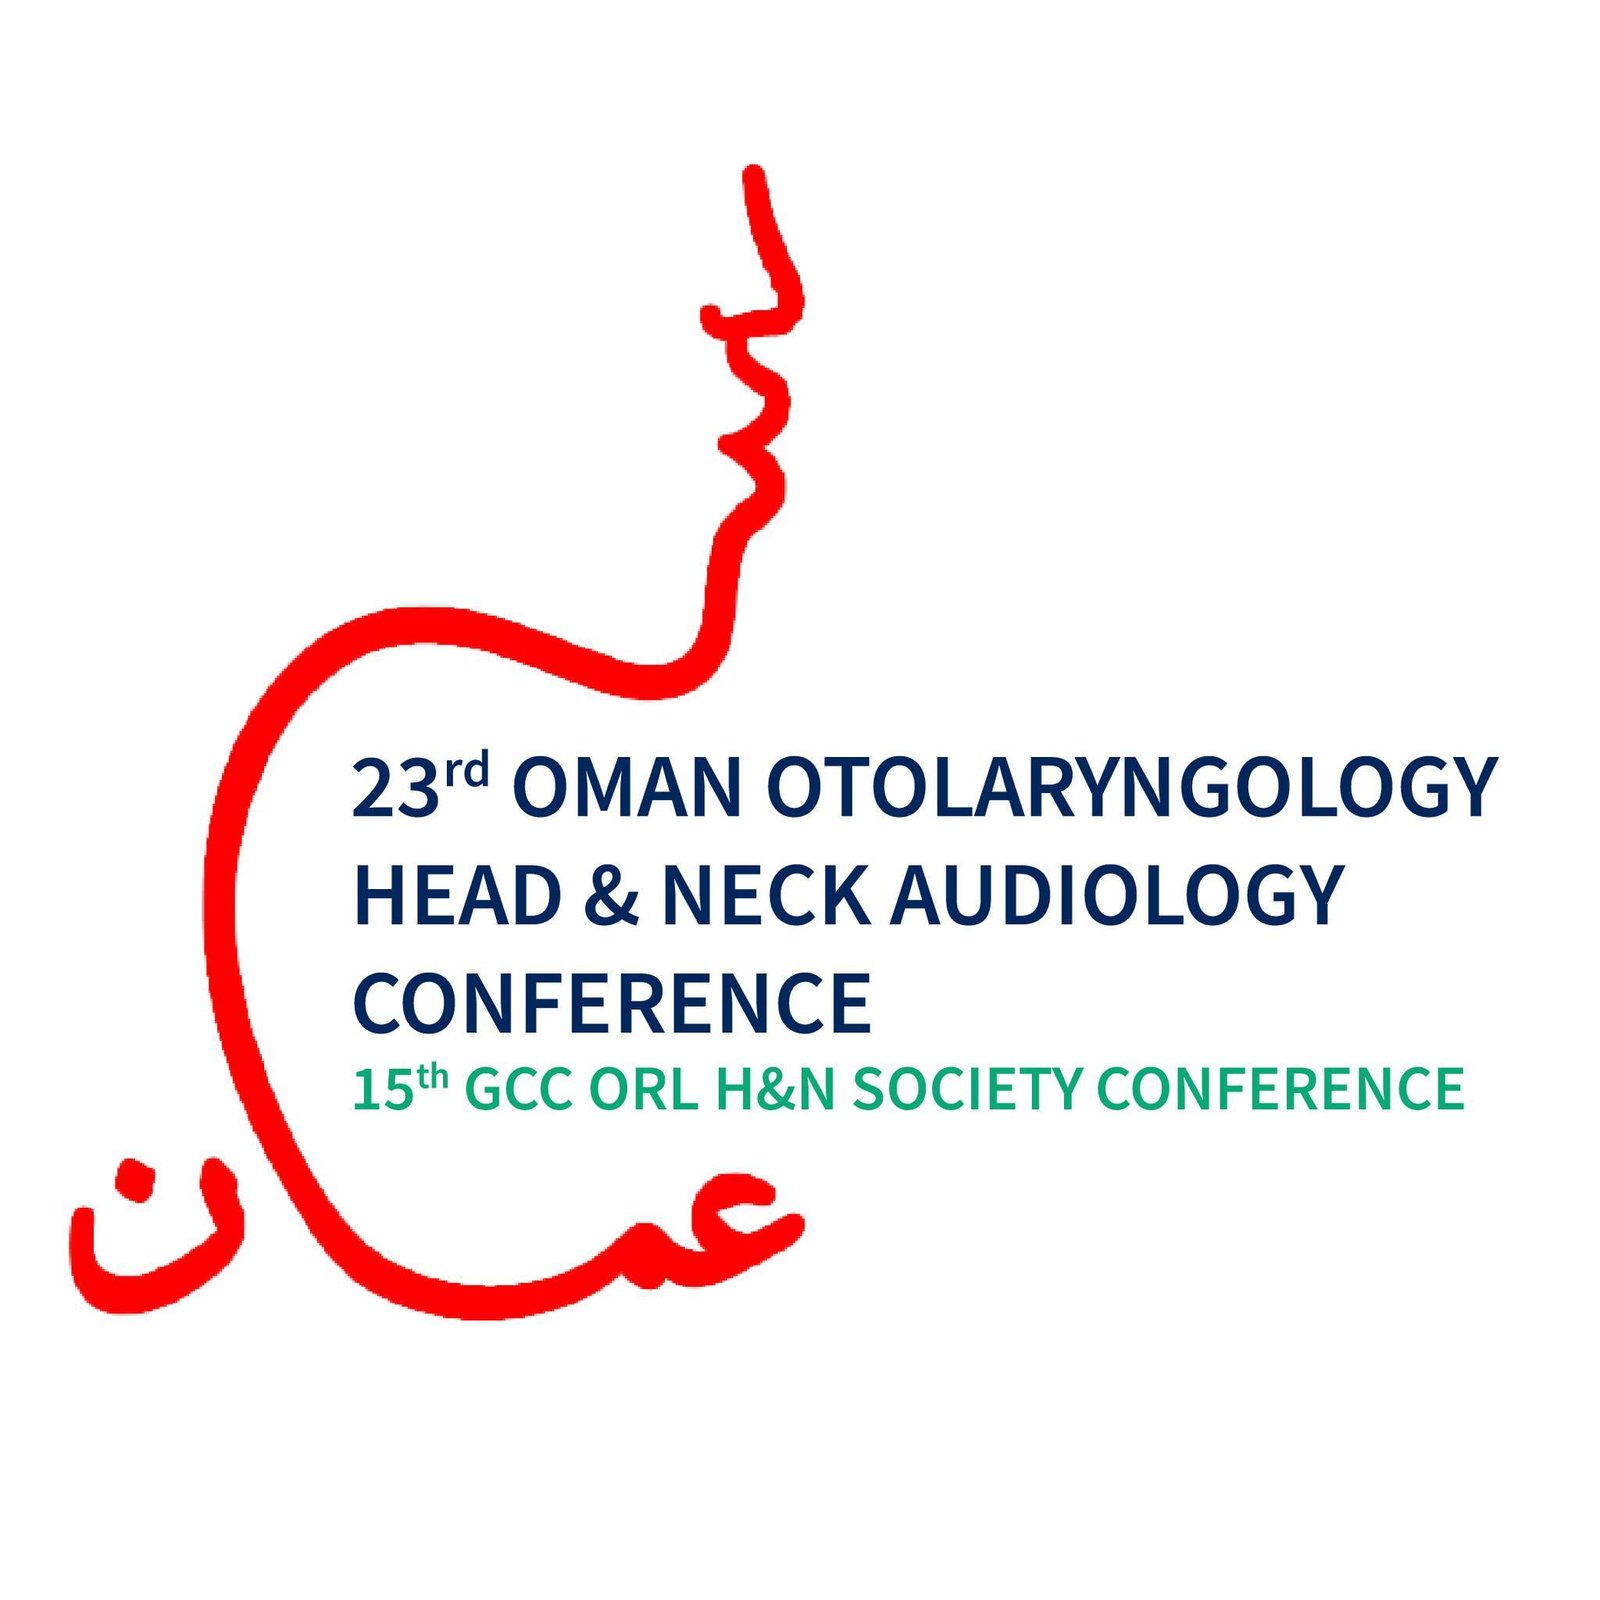 23rd Oman Otolaryngology Head & Neck Audiology Conference